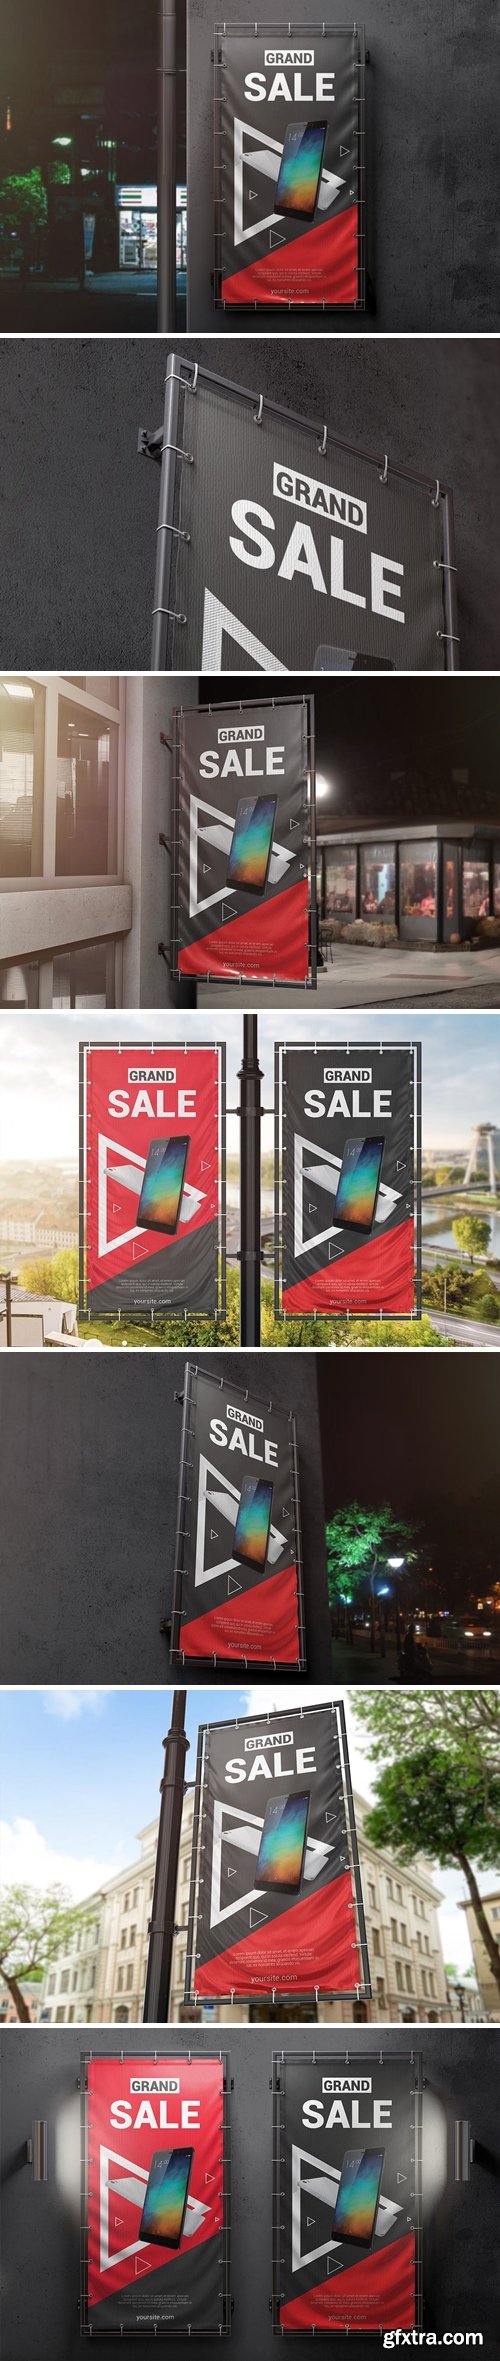 Vertical Outdoor Advertising Banner Mockup